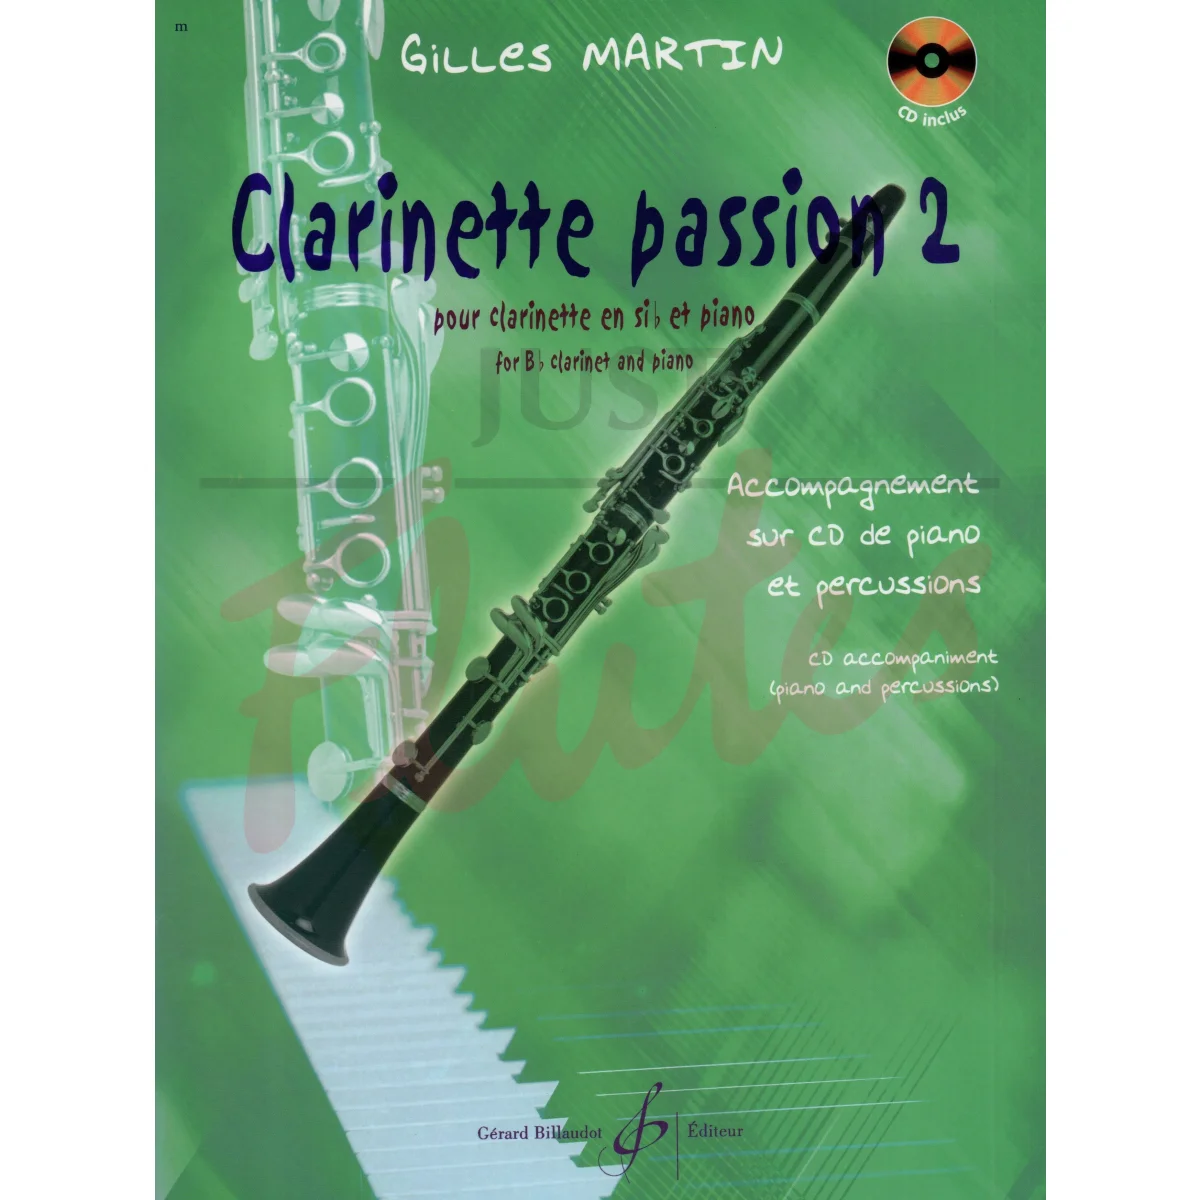 Clarinet Passion 2